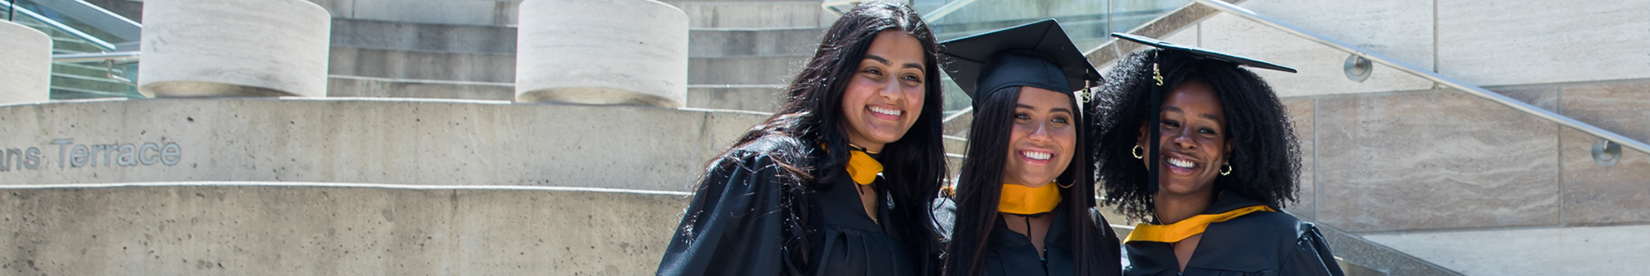 Three graduates posing in cap and gown